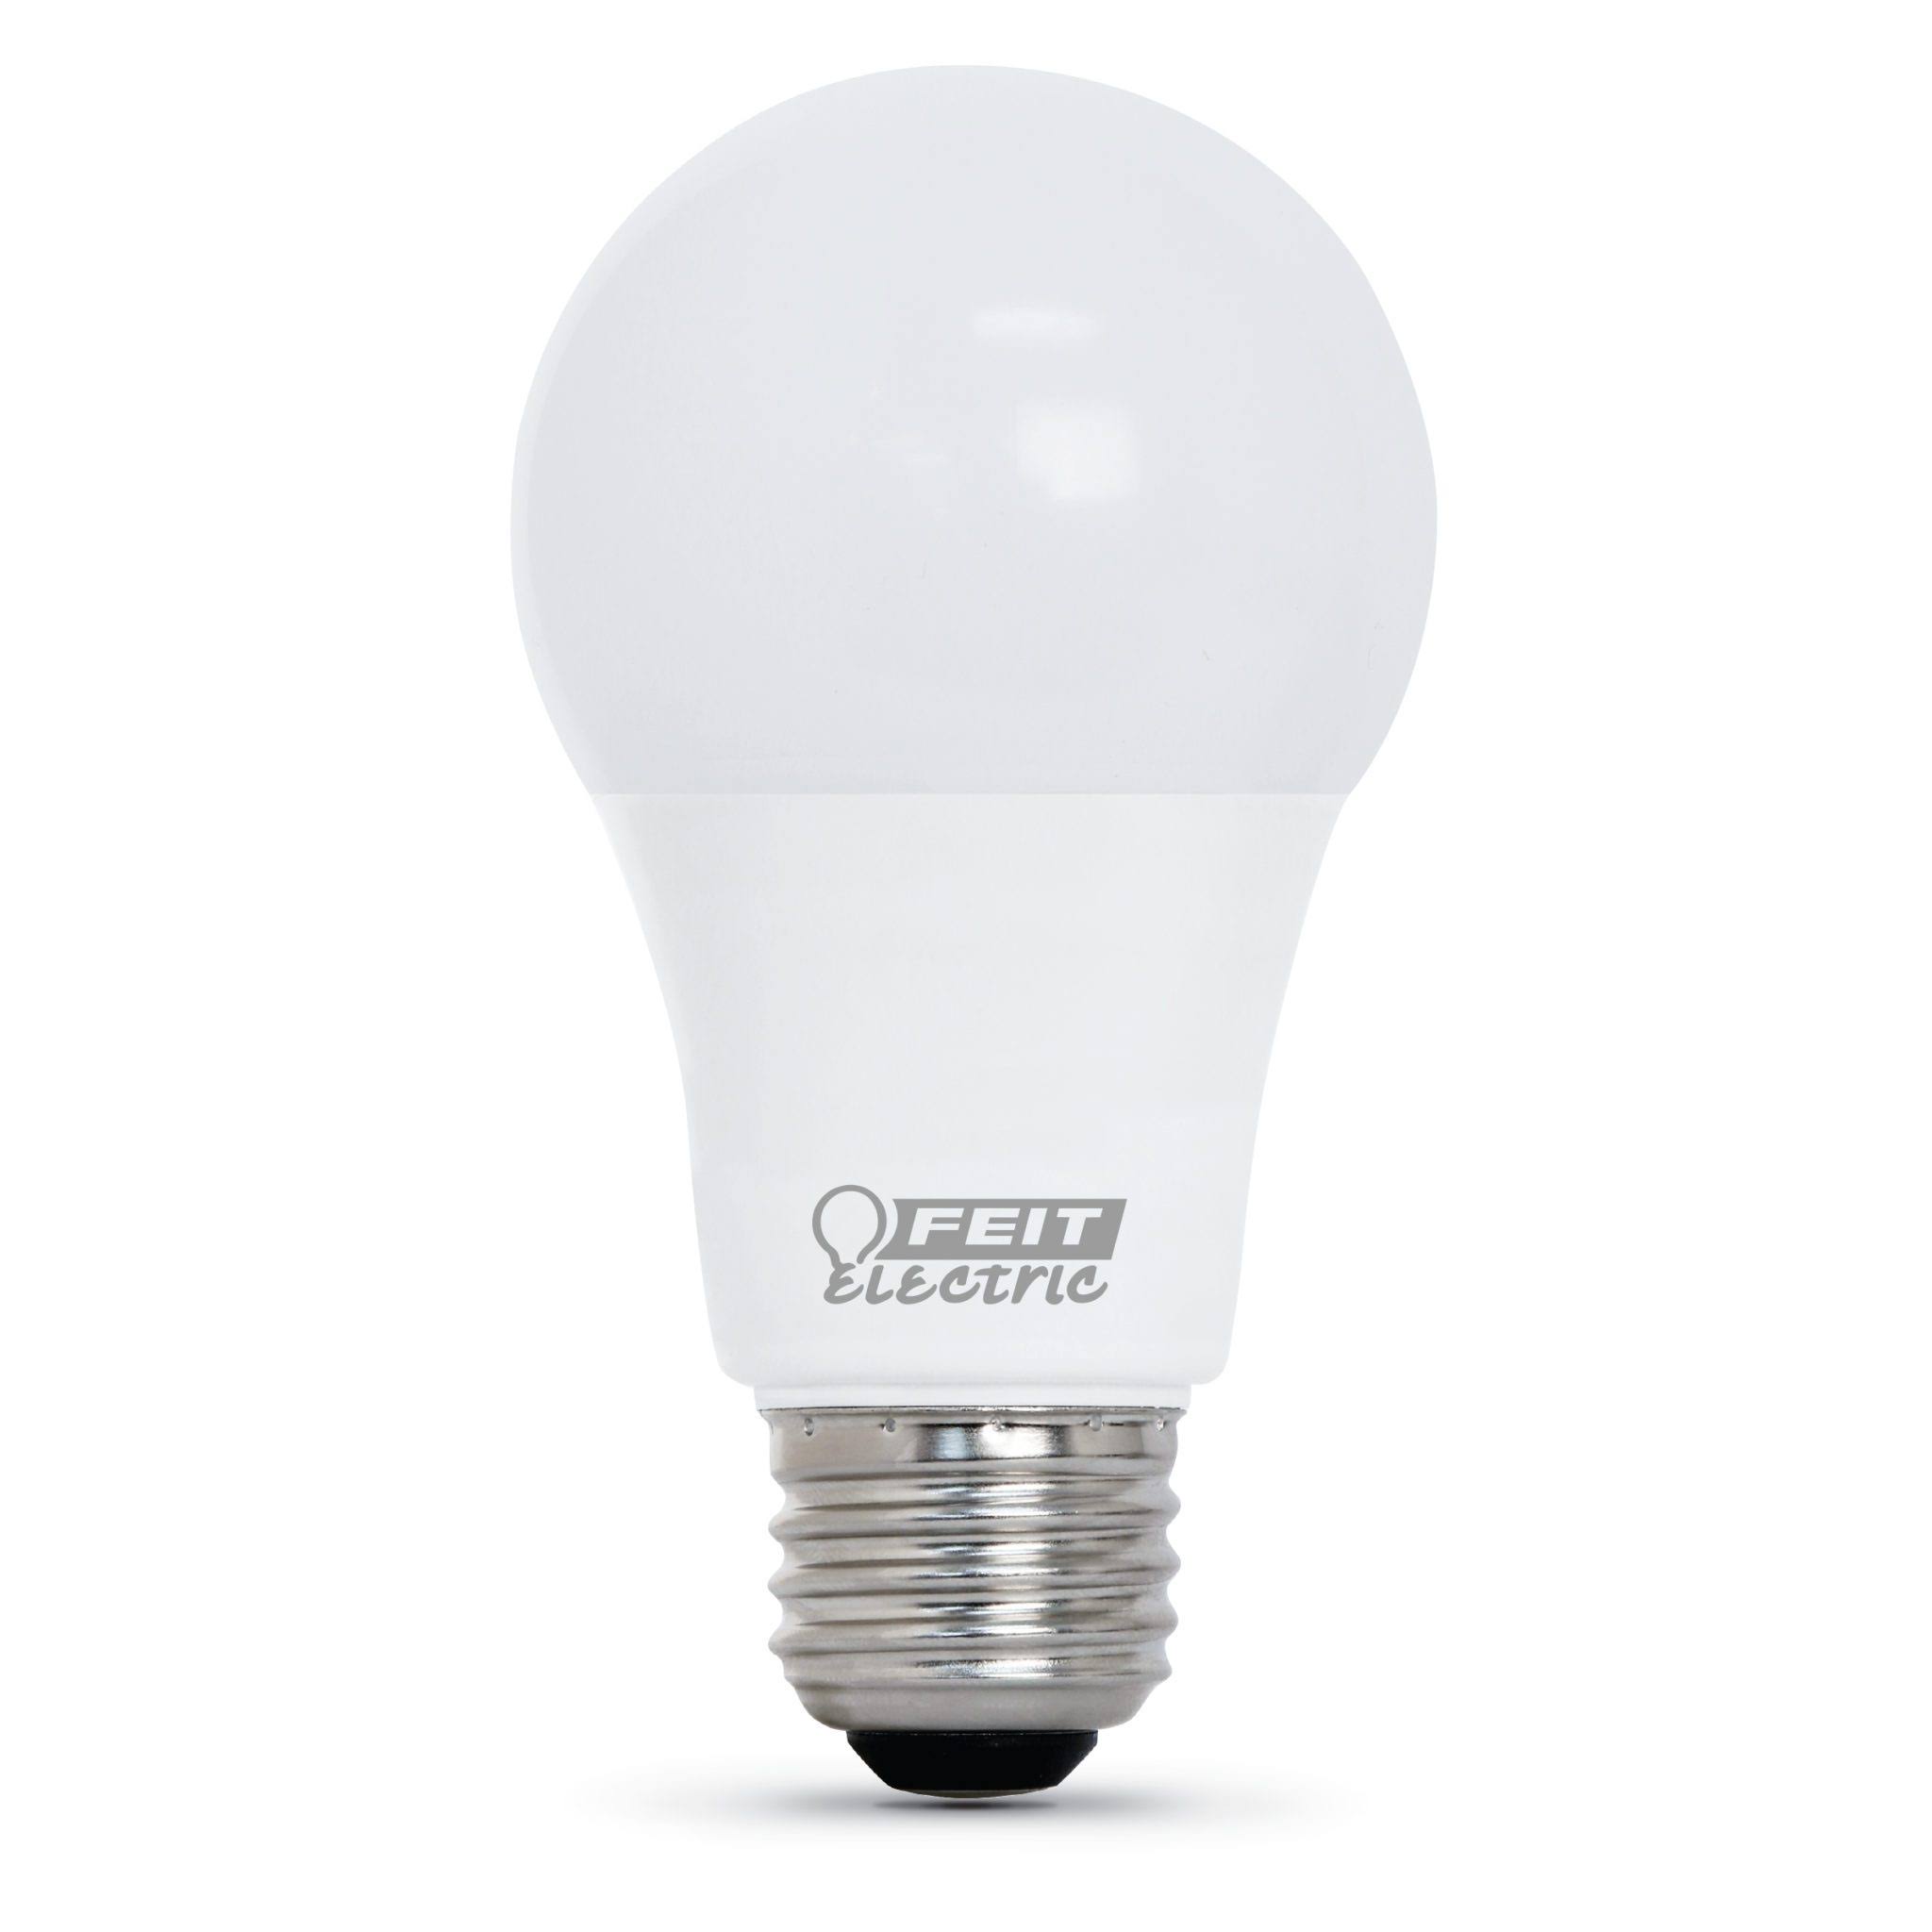 Feit Electric Enhance Light Bulbs, LED, Replacement, Soft White, 60 Watts - 4 bulbs